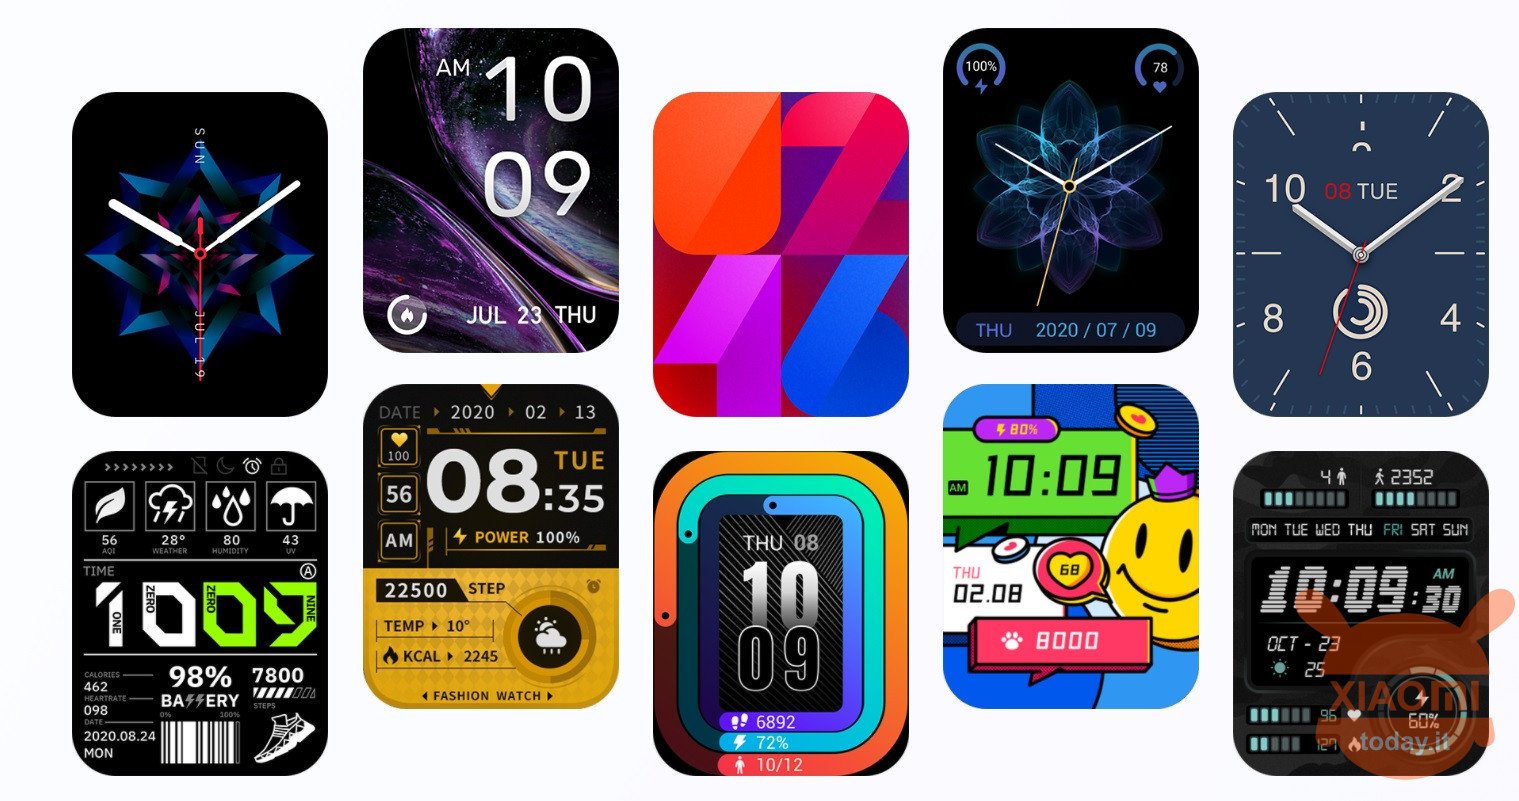 X8 pro smart watch приложение для андроид